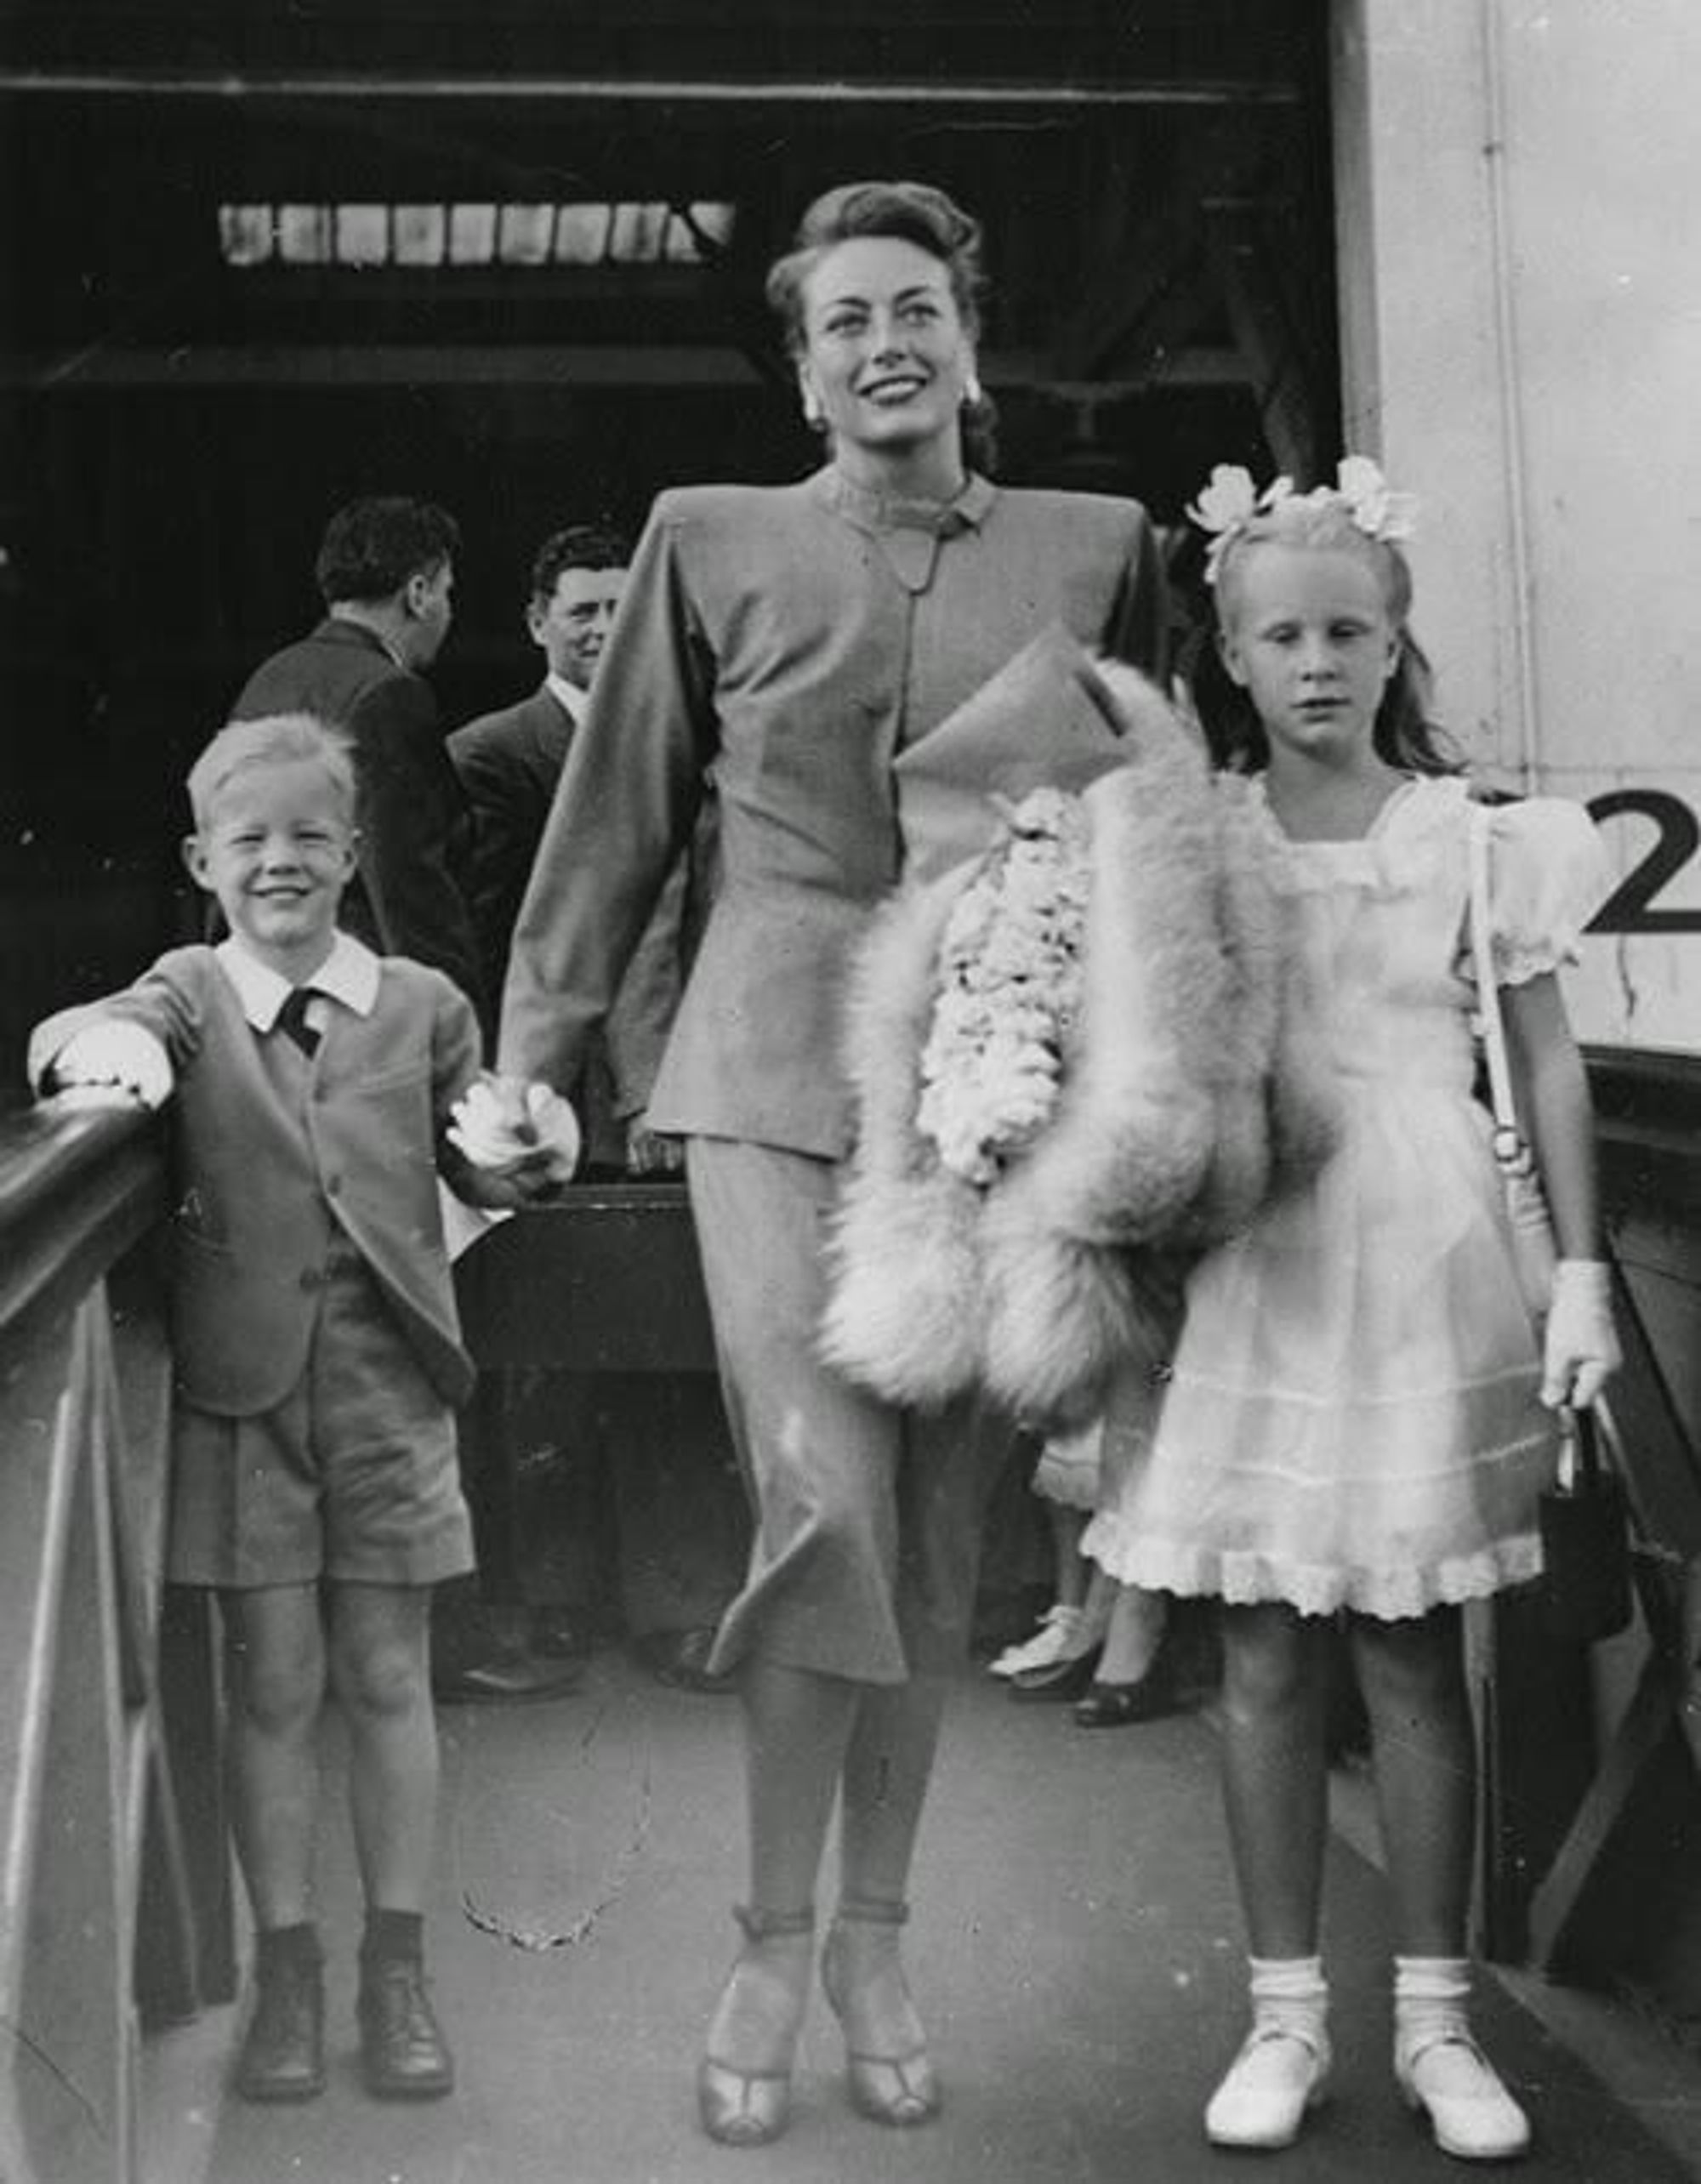 Christopher Crawford, Joan Crawford, and Cristina Crawford smiling while walking